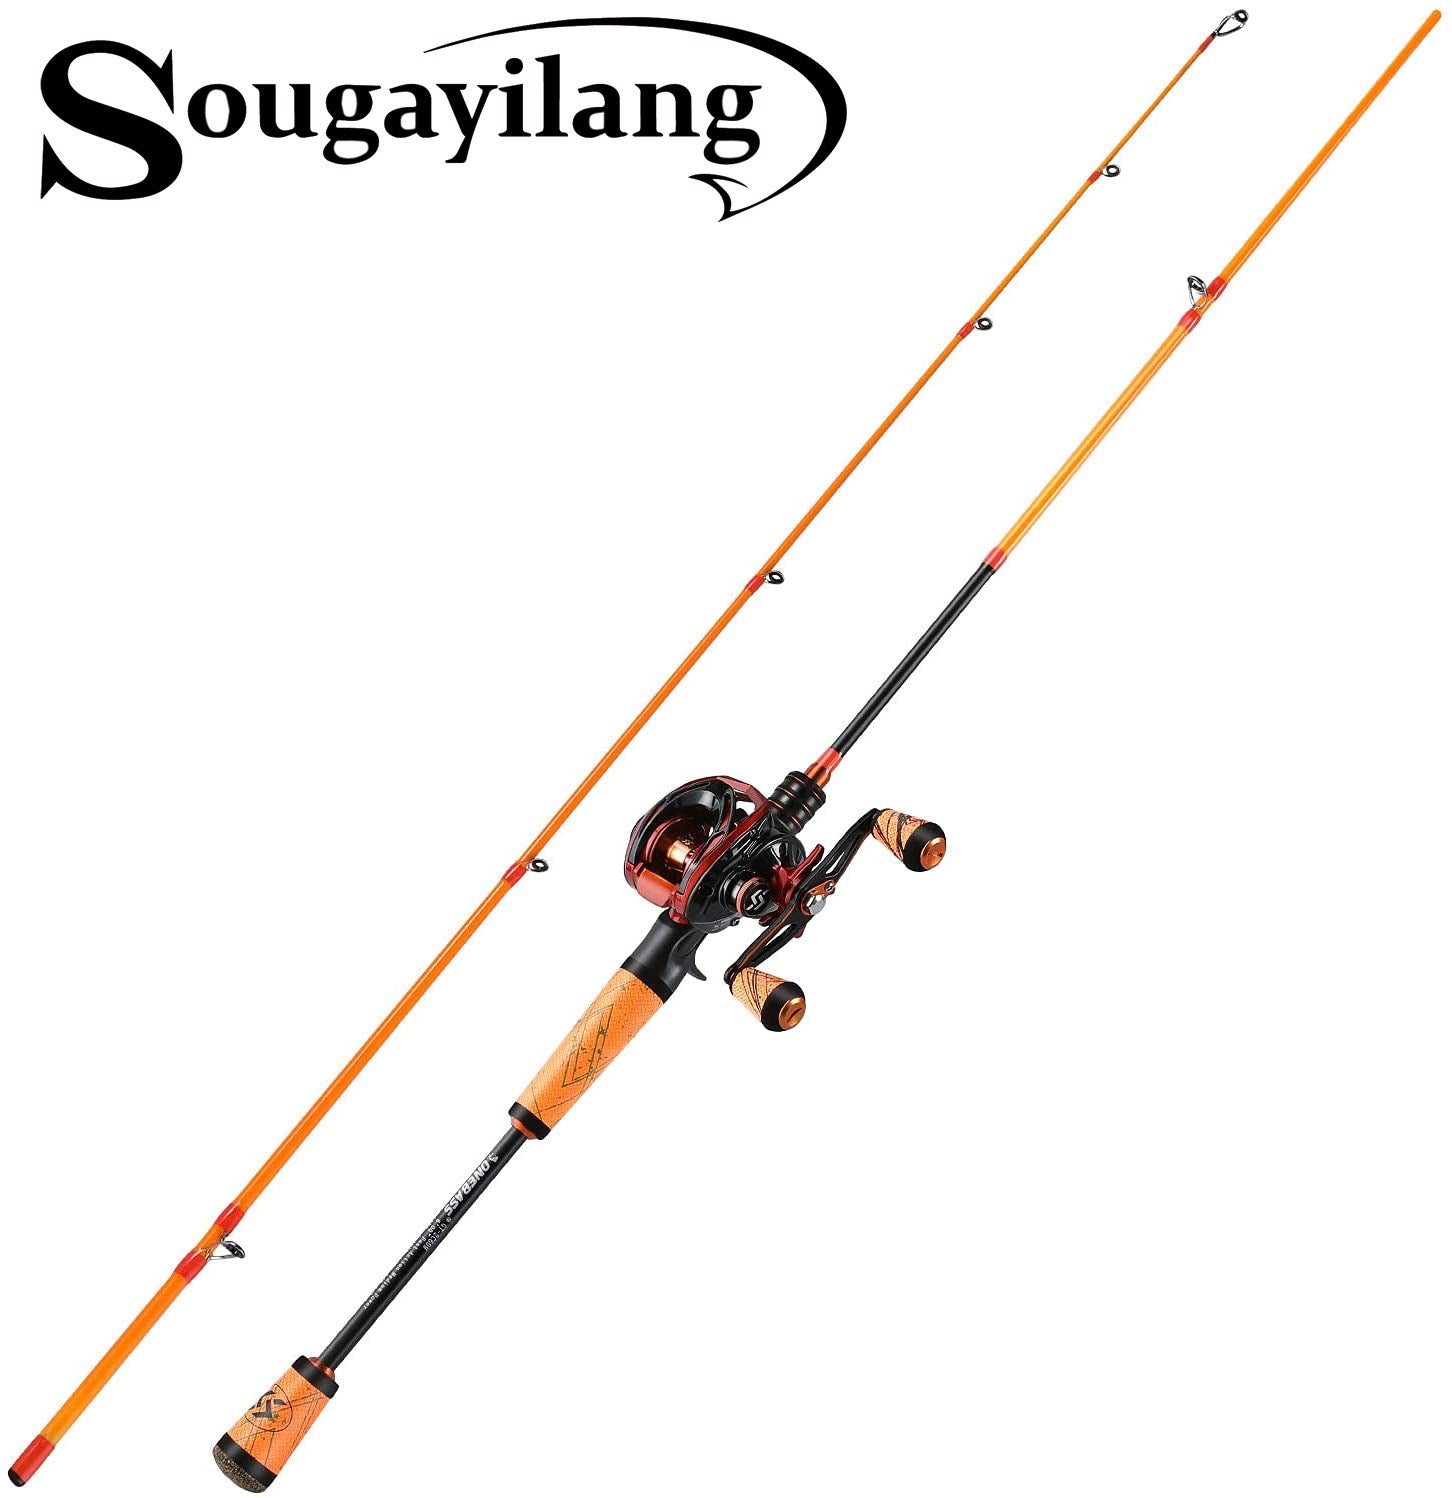 One Bass Fishing Rod and Reel Combo, Medium Fast Baitcasting Combo